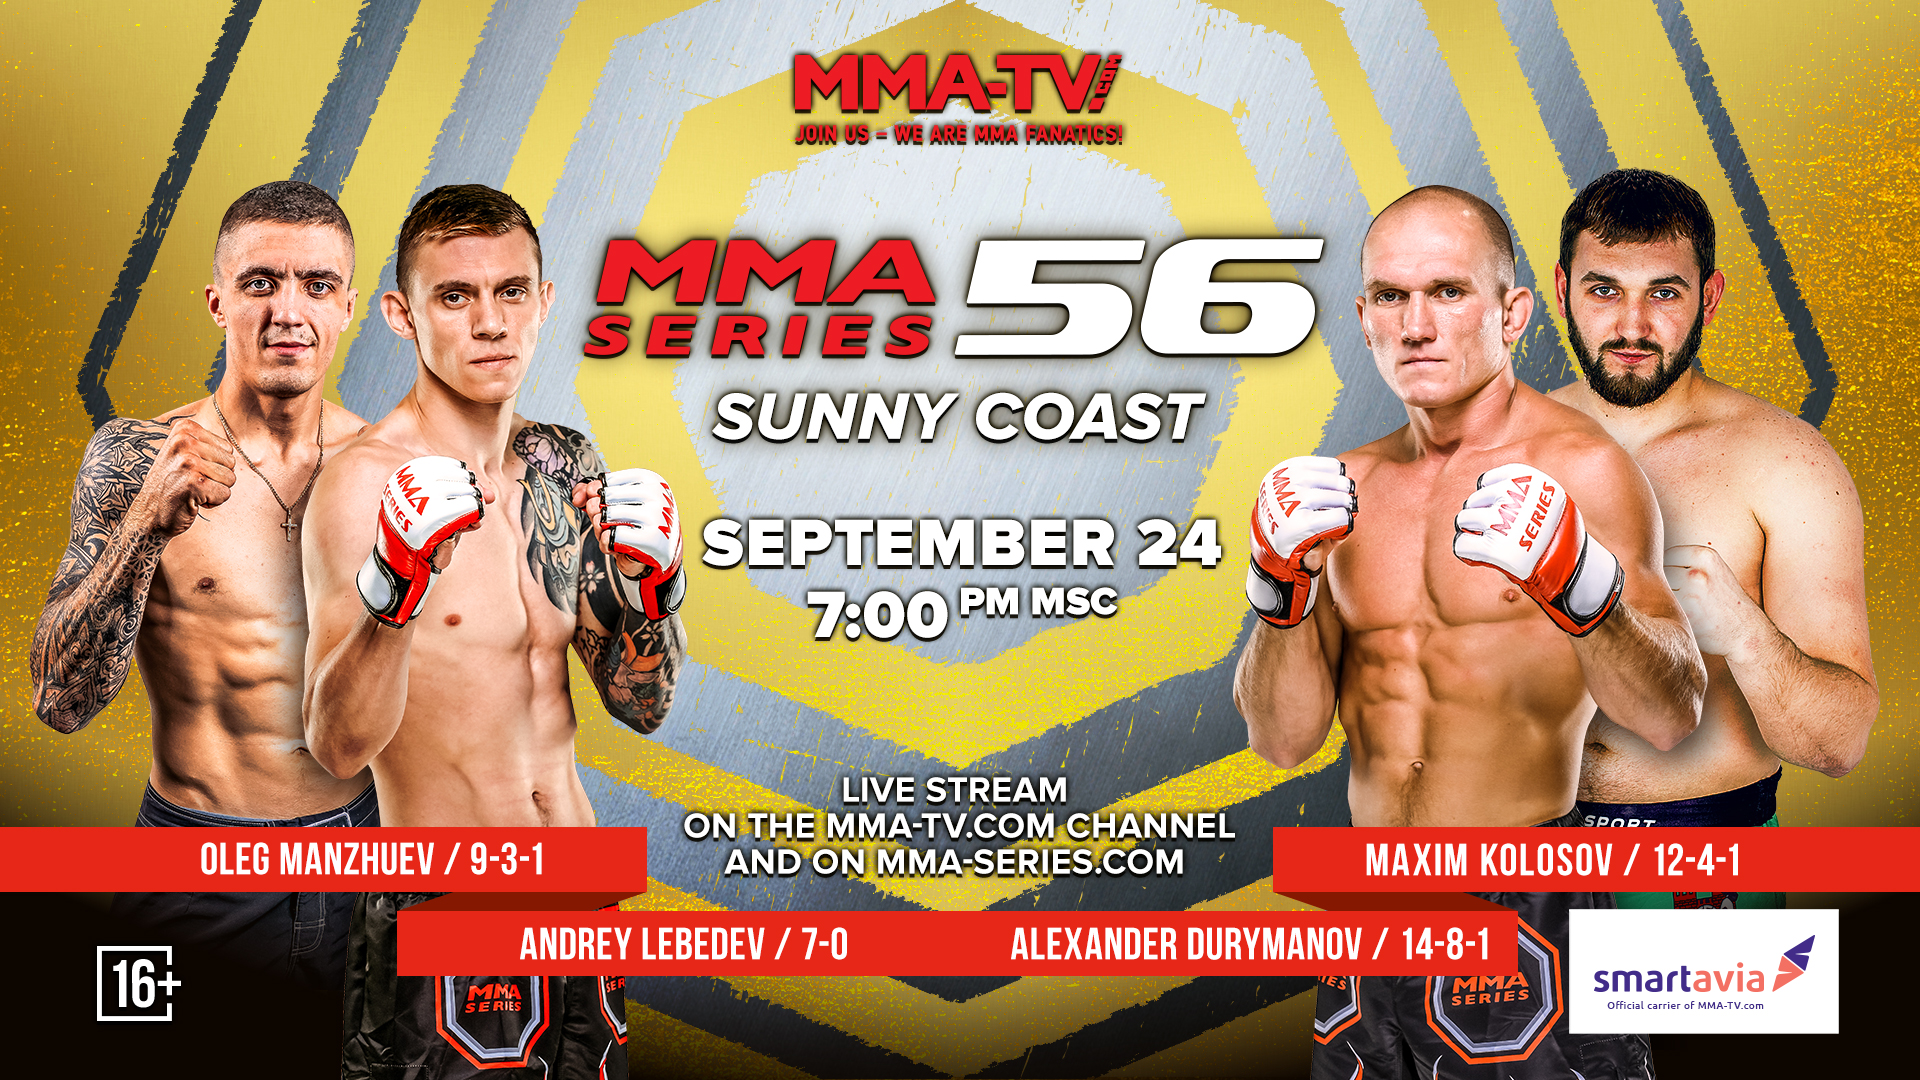 MMA Series — 56 Sunny coast MMA Series official website